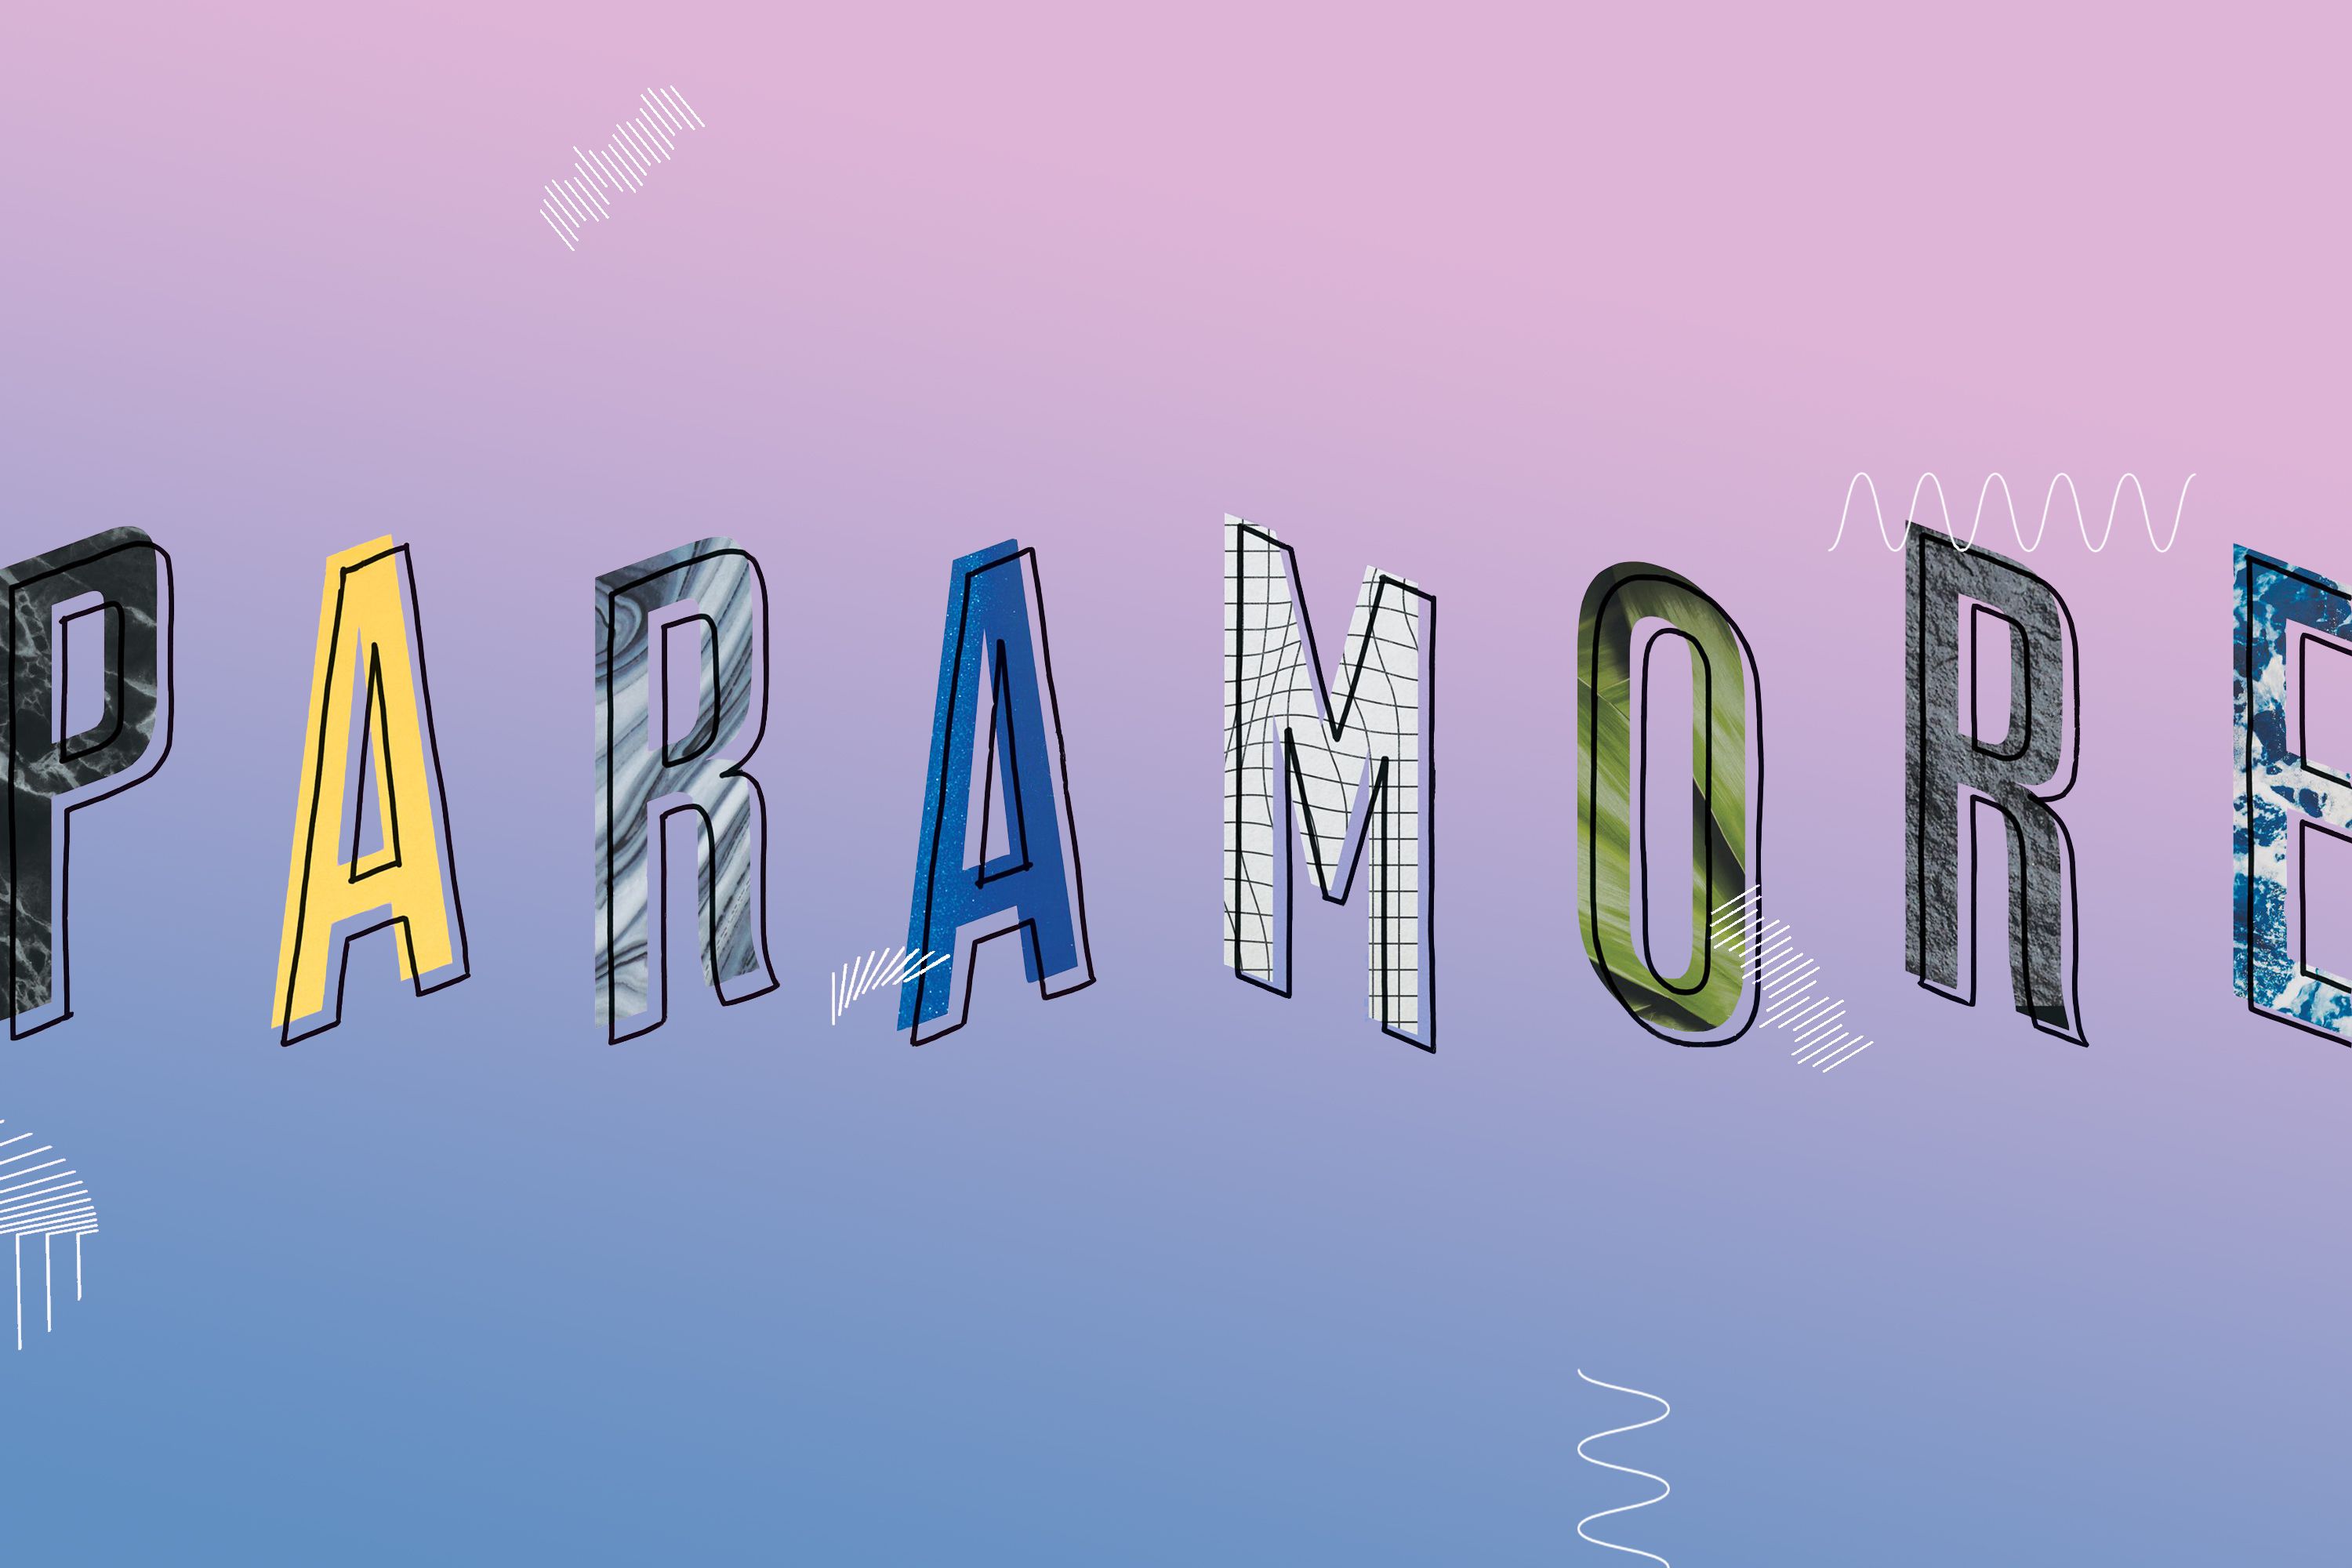 Paramore Wallpapers 3  Paramore Wallpaper 9215162  Fanpop